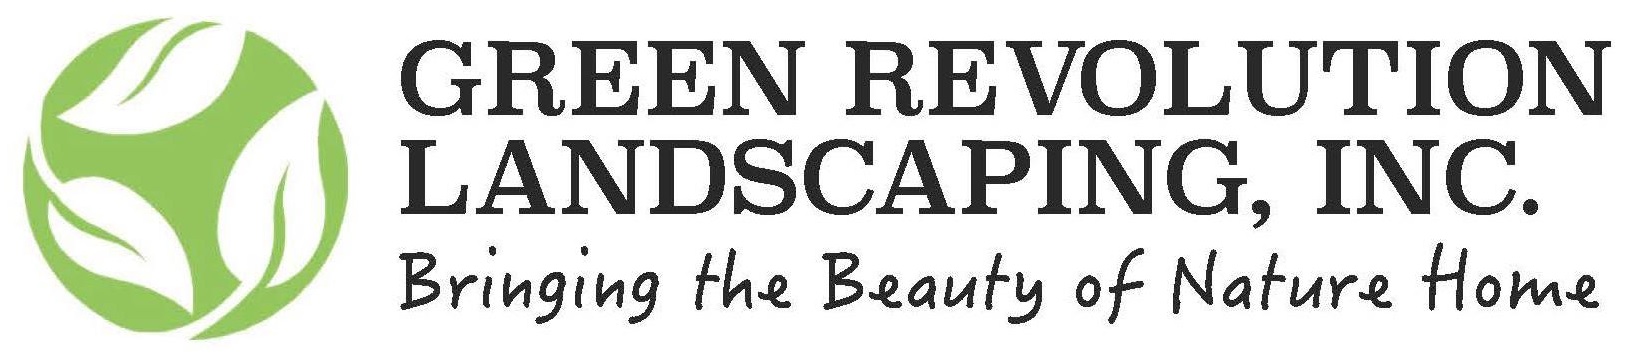 Green Revolution Landscaping, Inc. Logo